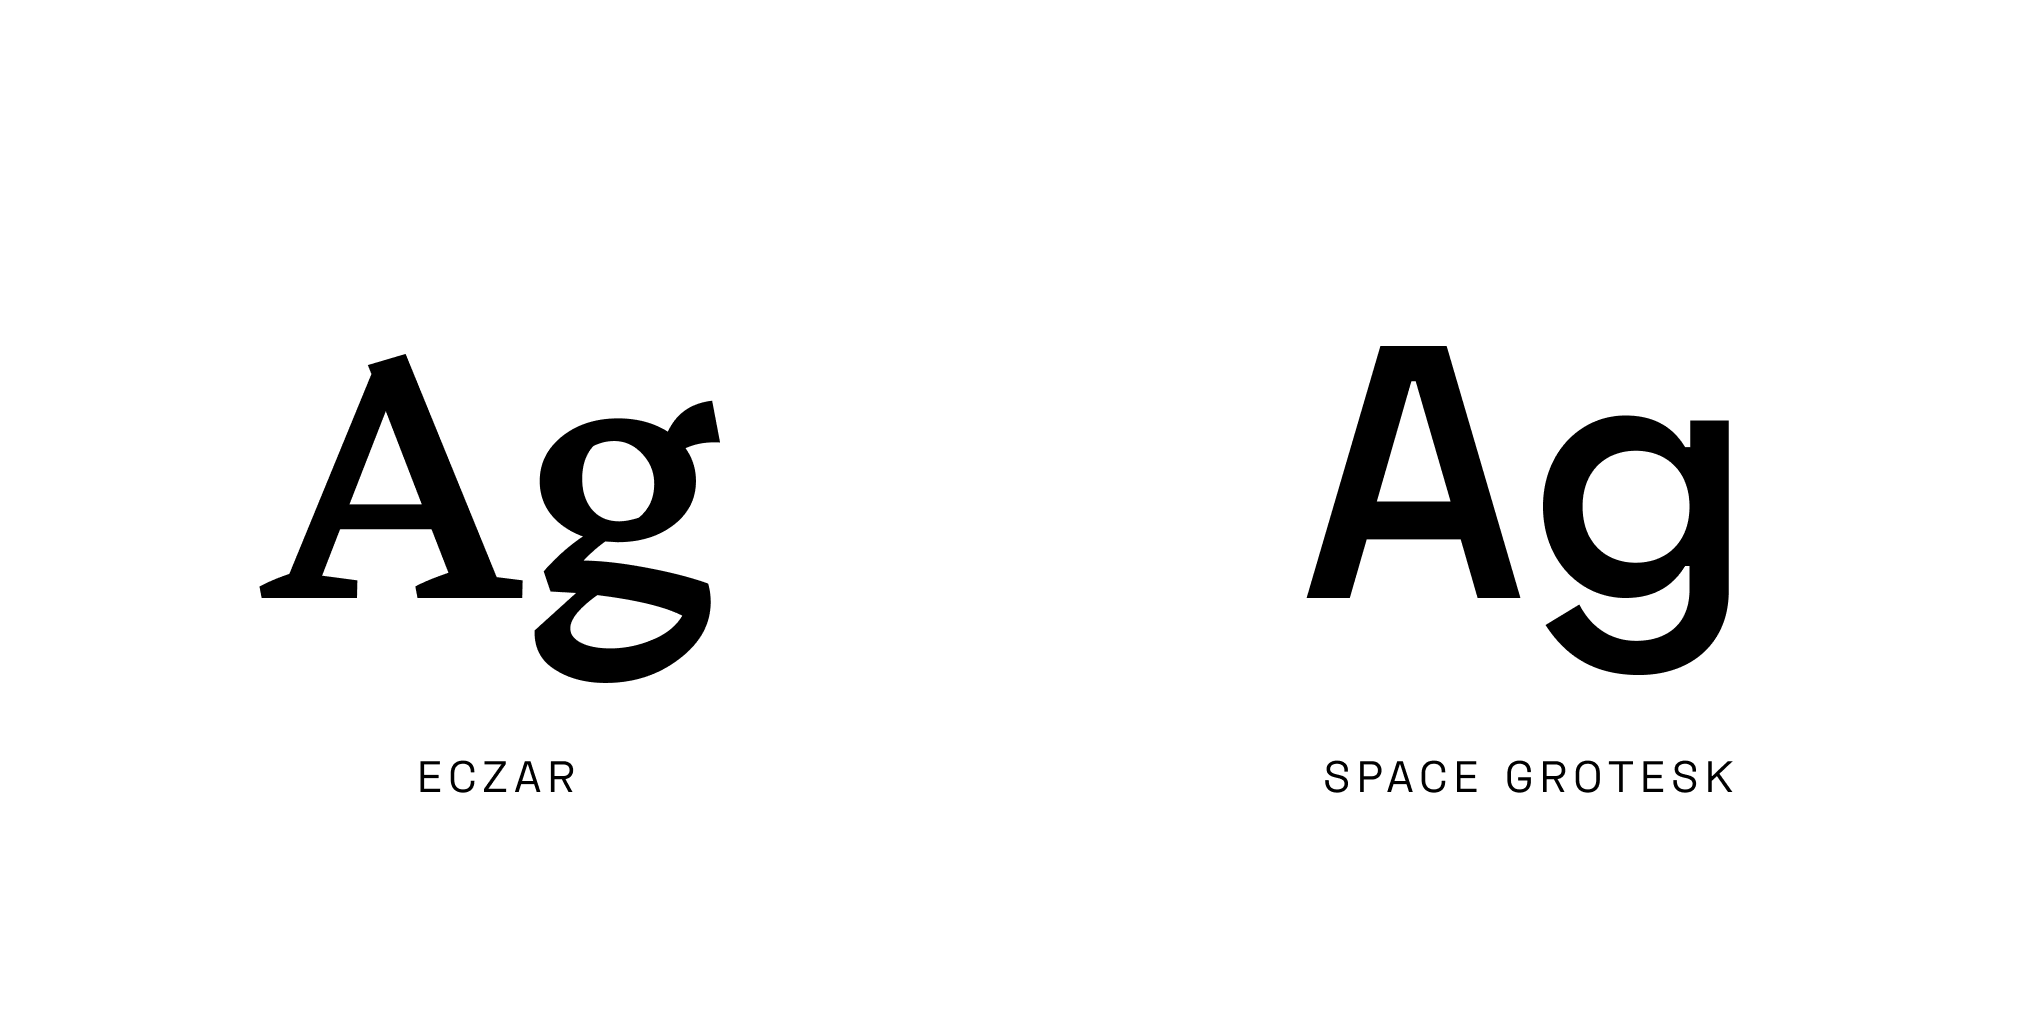 Typography System